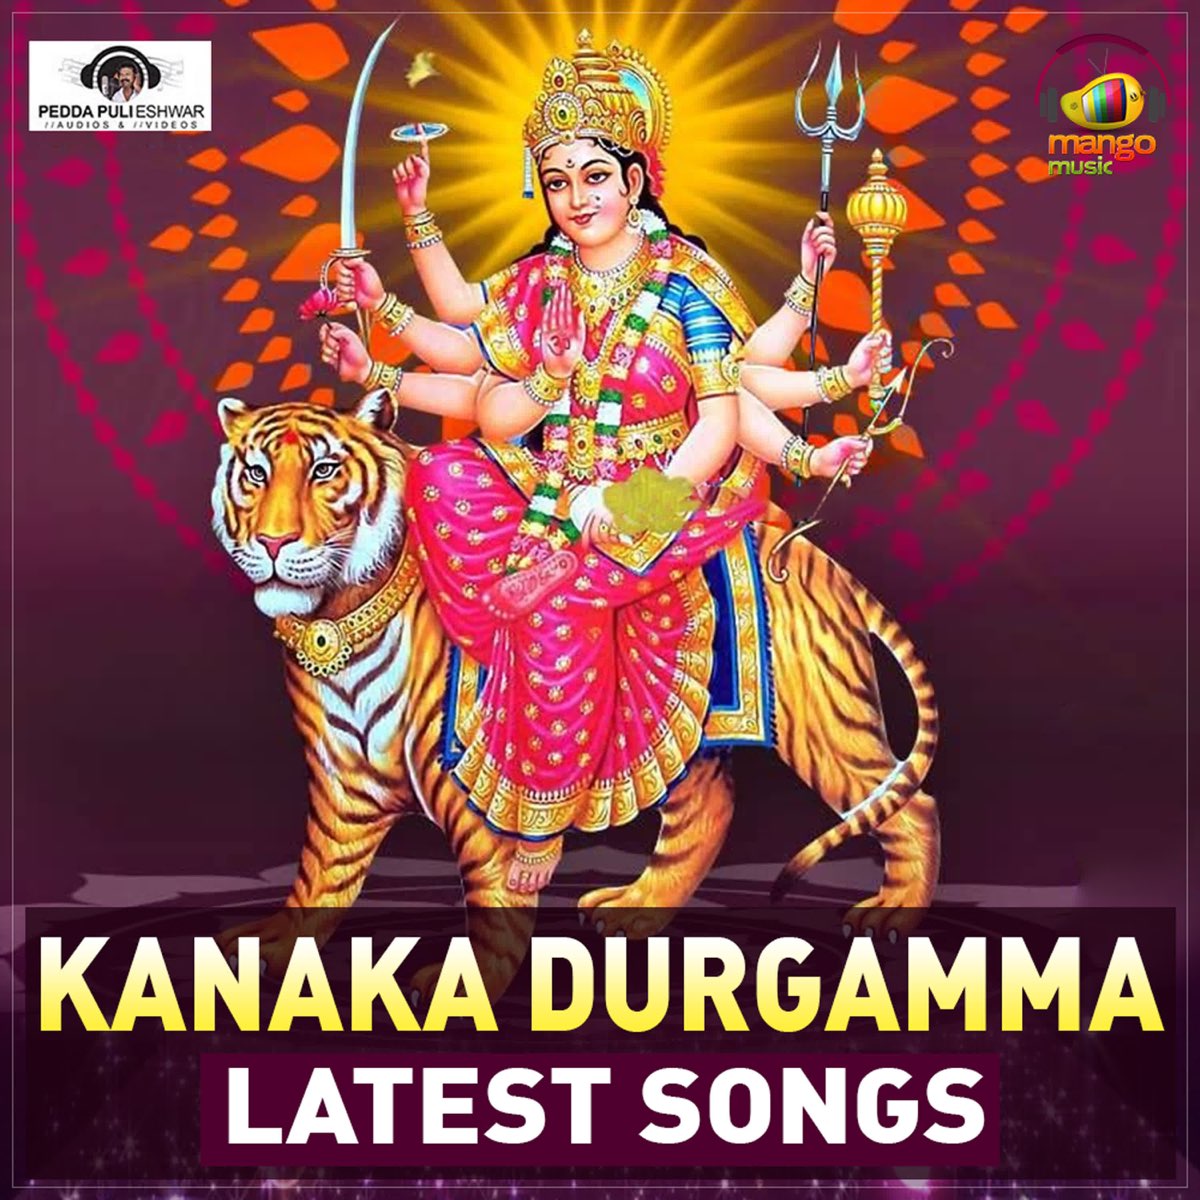 Kanaka Durgamma Latest Songs - EP by Peddapuli Eshwar, Nagendhar ...